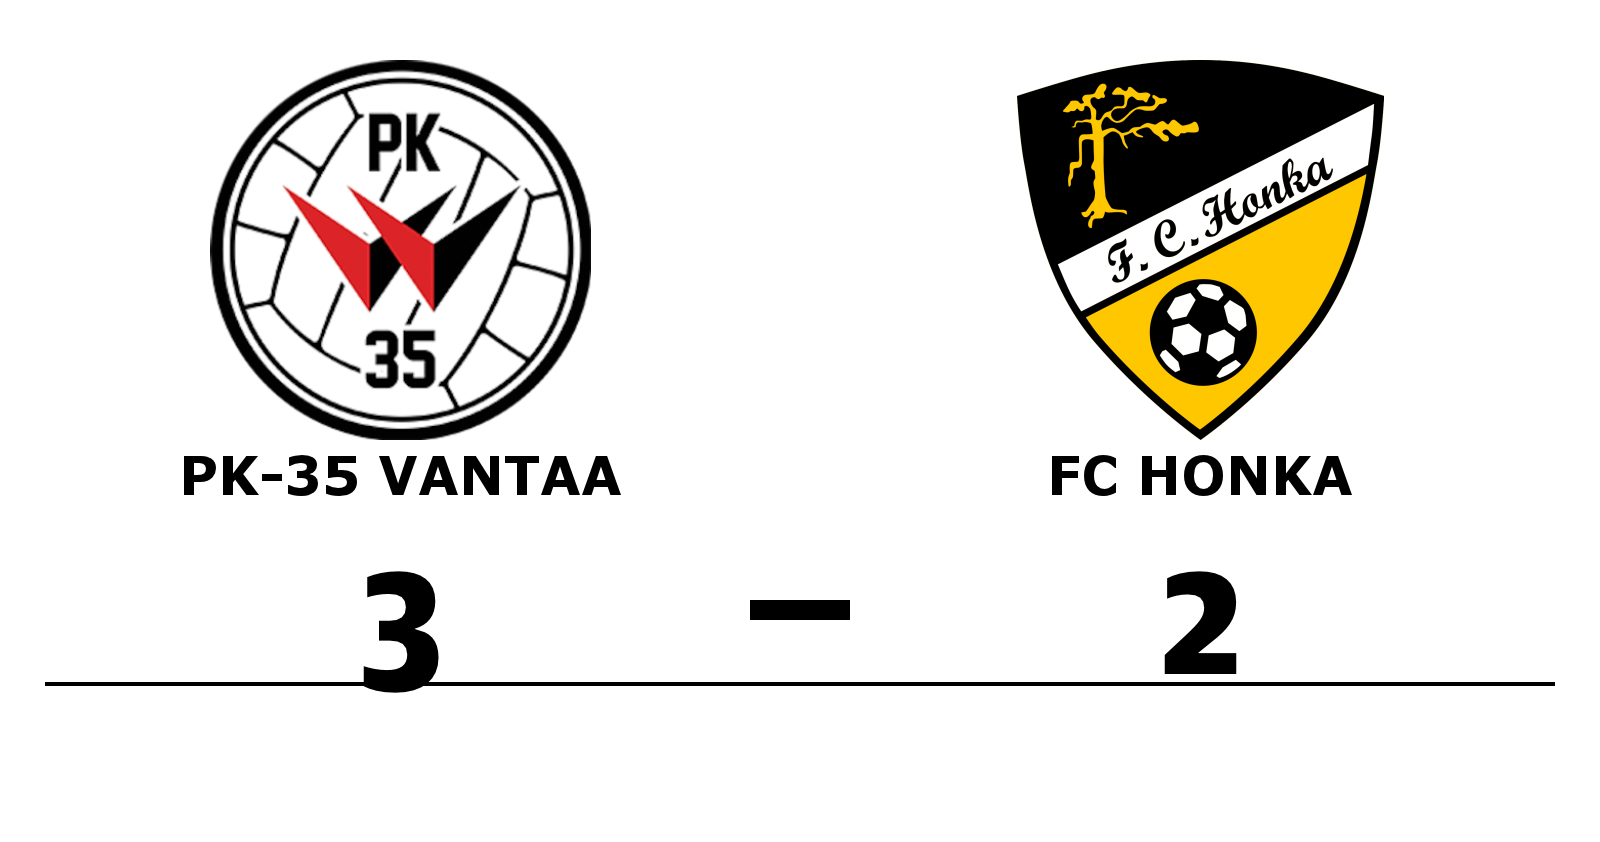 PK-35 Vantaa vann mot FC Honka